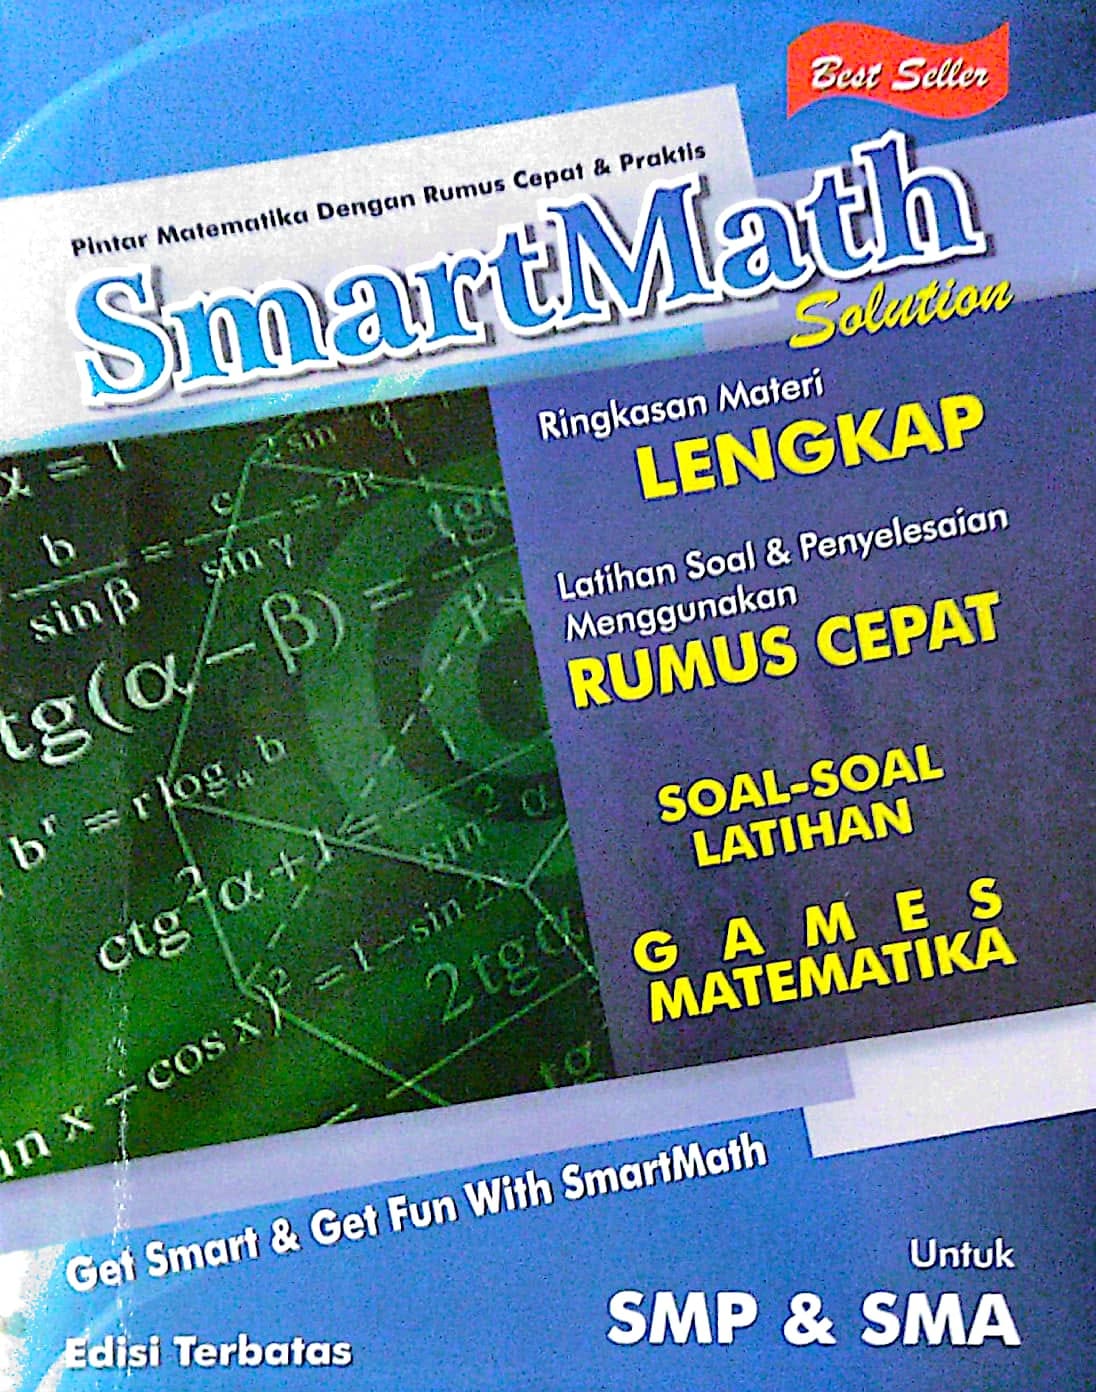 Pintar matematika dengan SmartMath solution